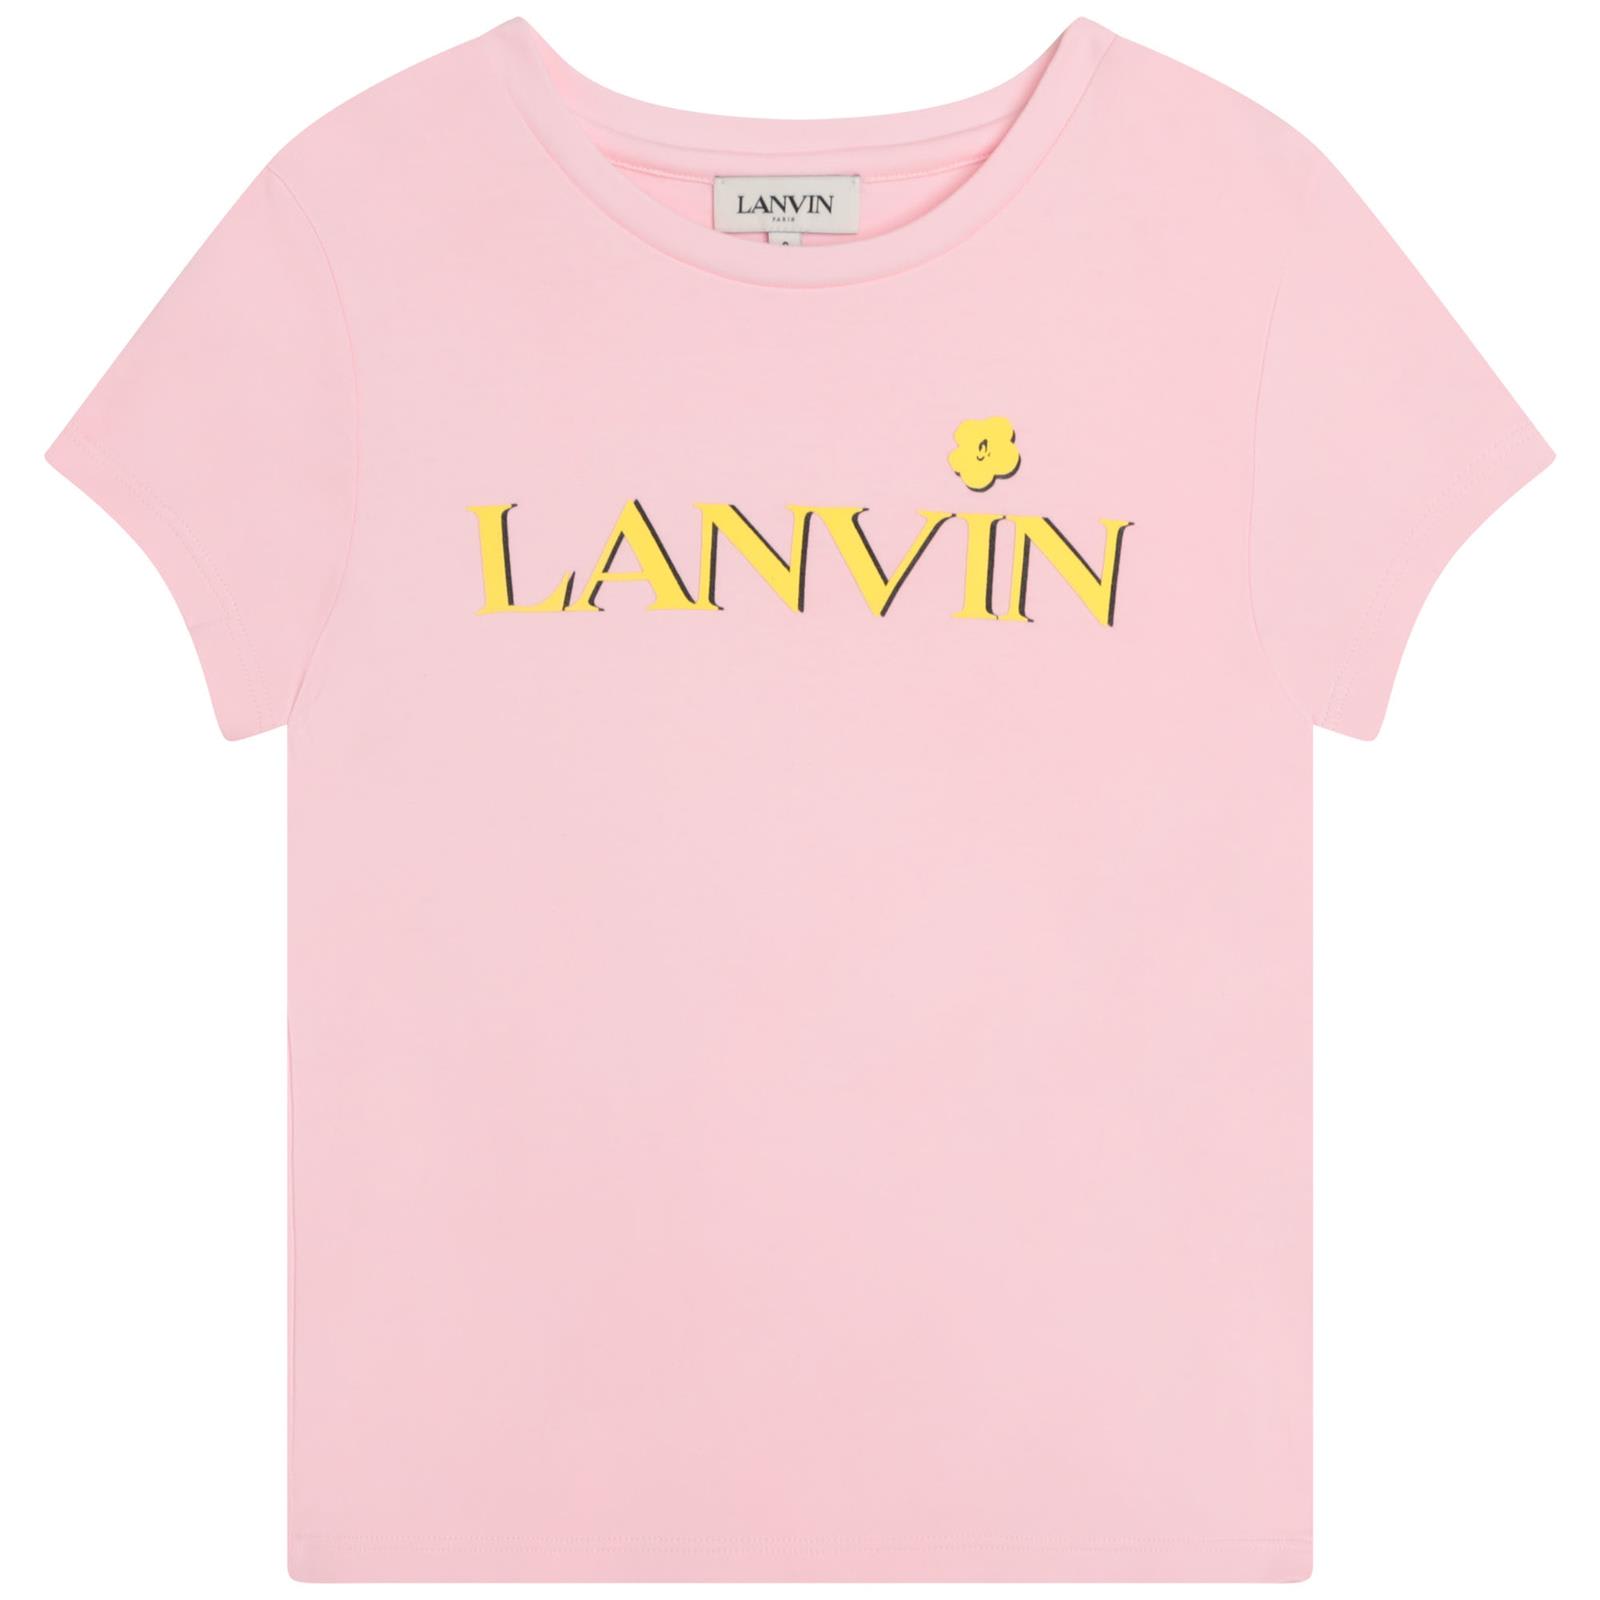 LANVIN PRINTED T-SHIRT